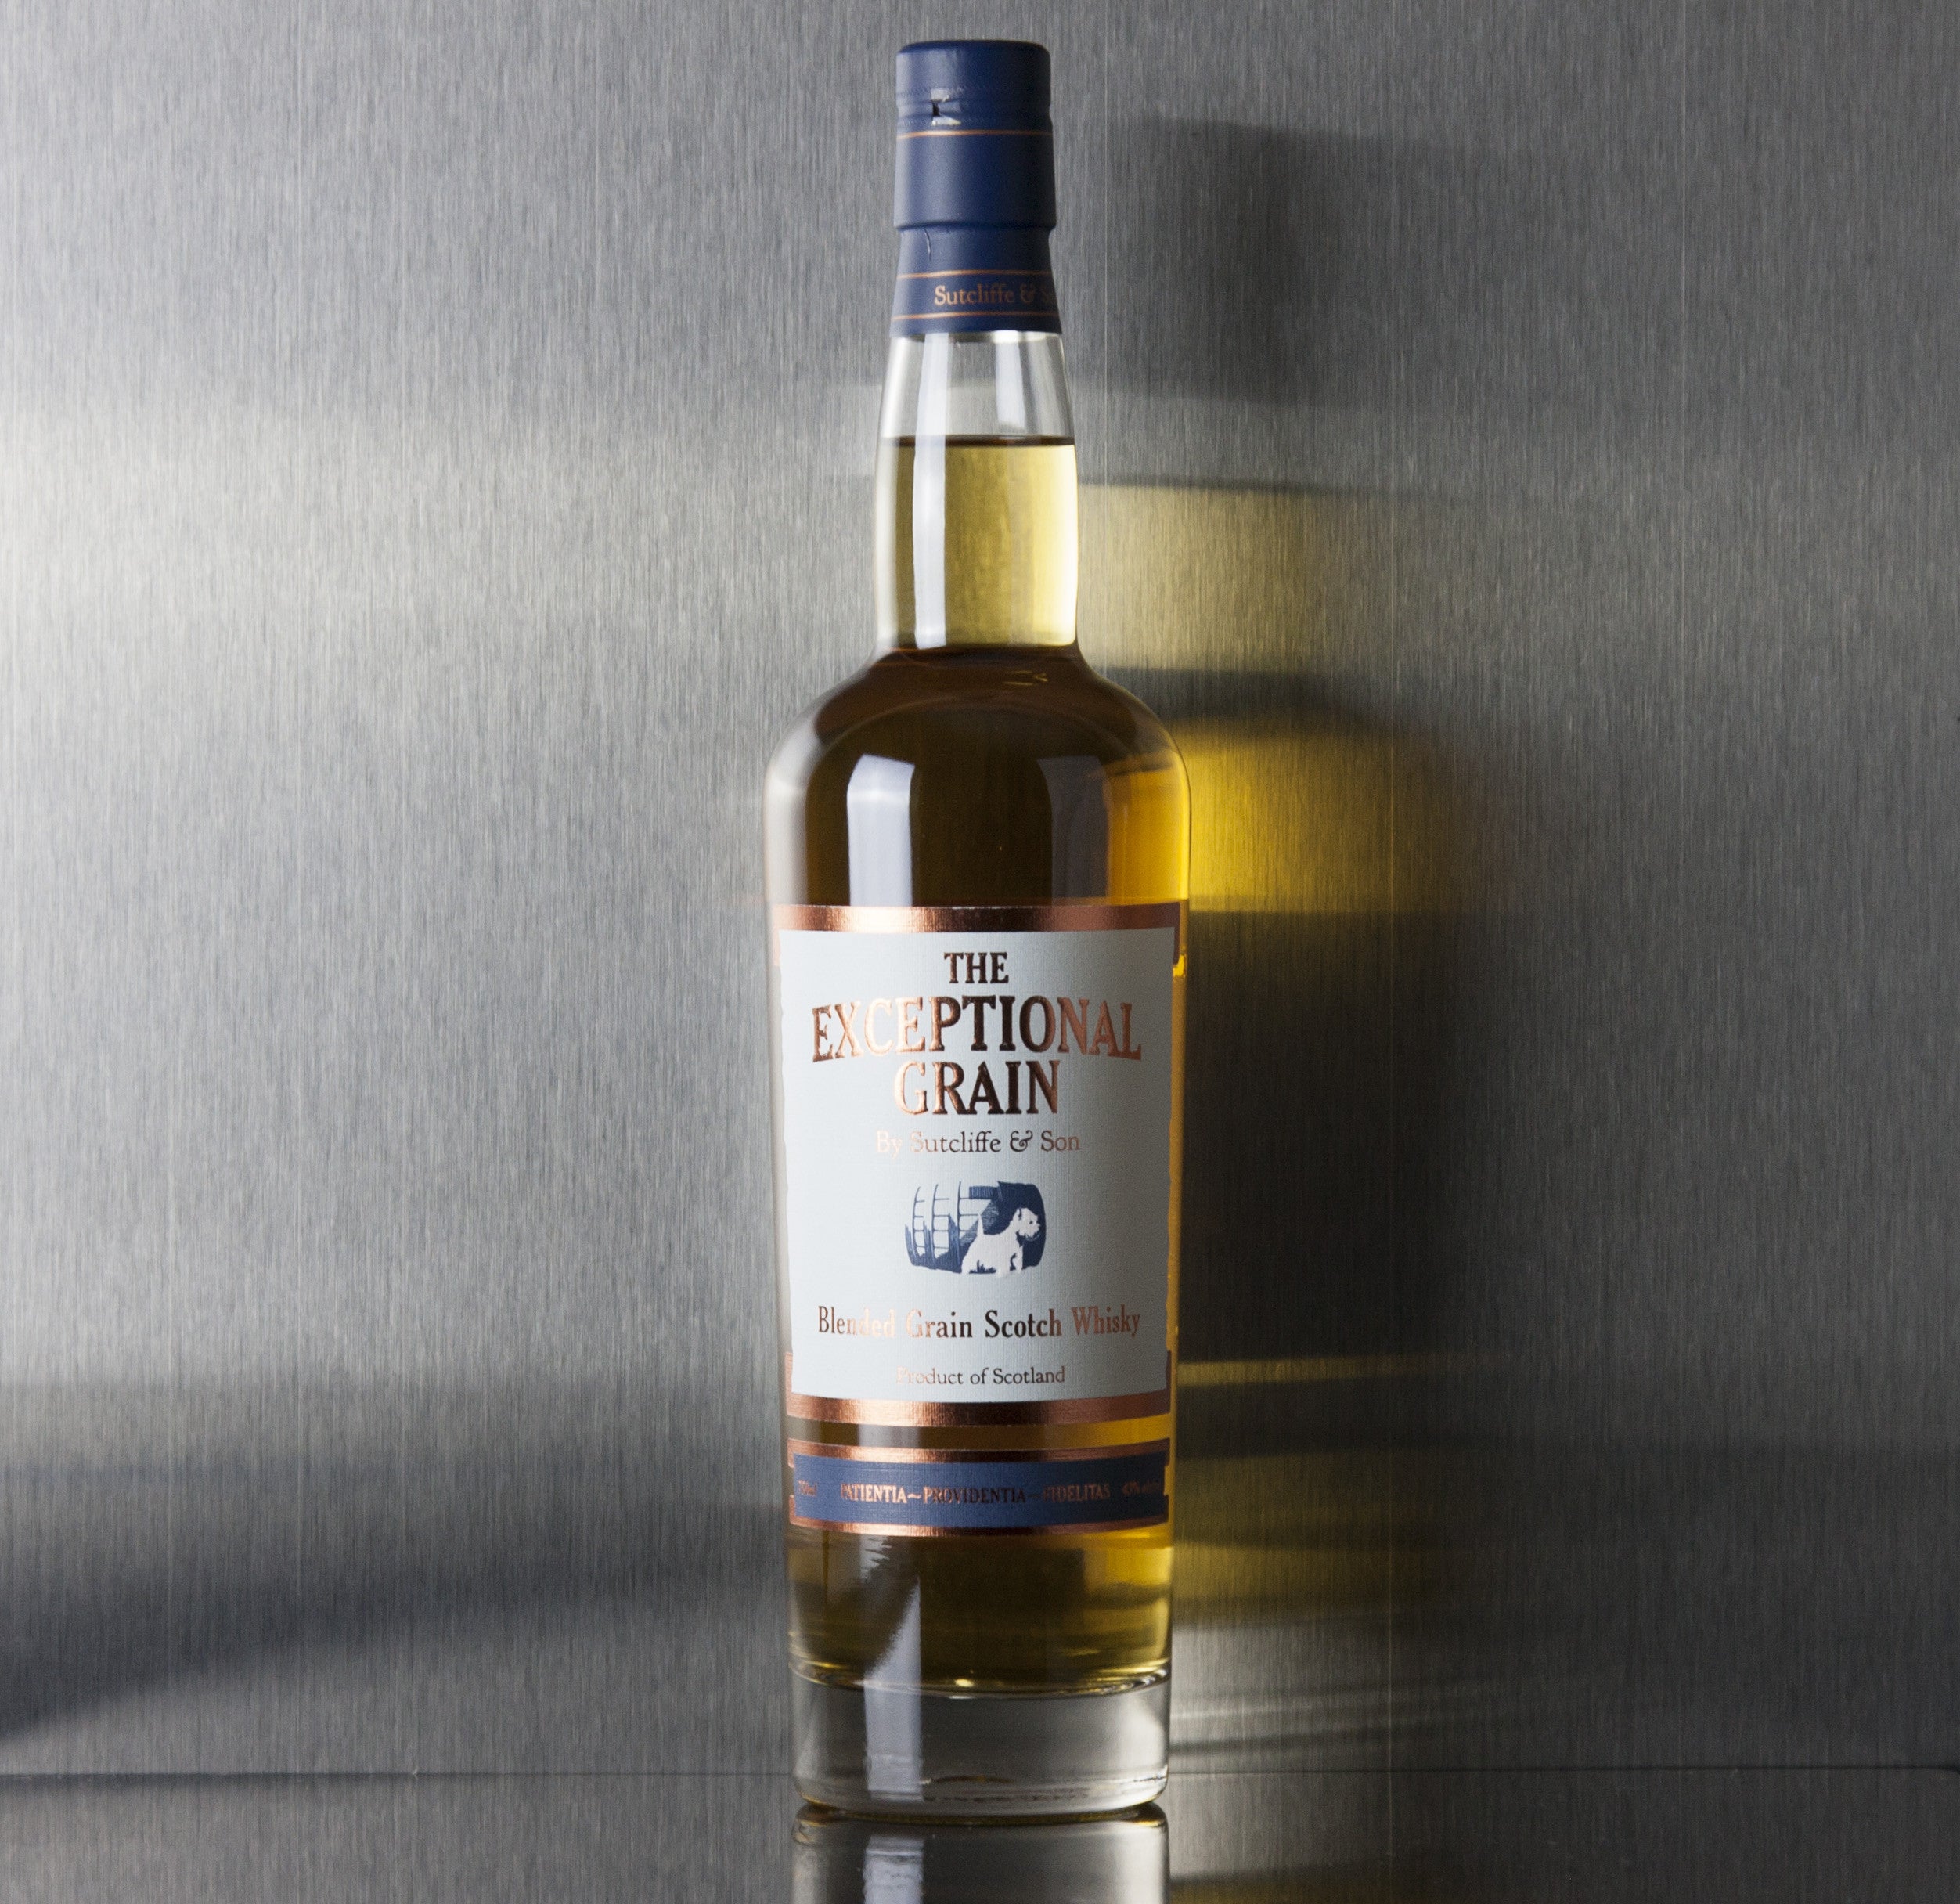 Sutcliffe & Son The Exceptional Grain Scotch Whisky 750 ml